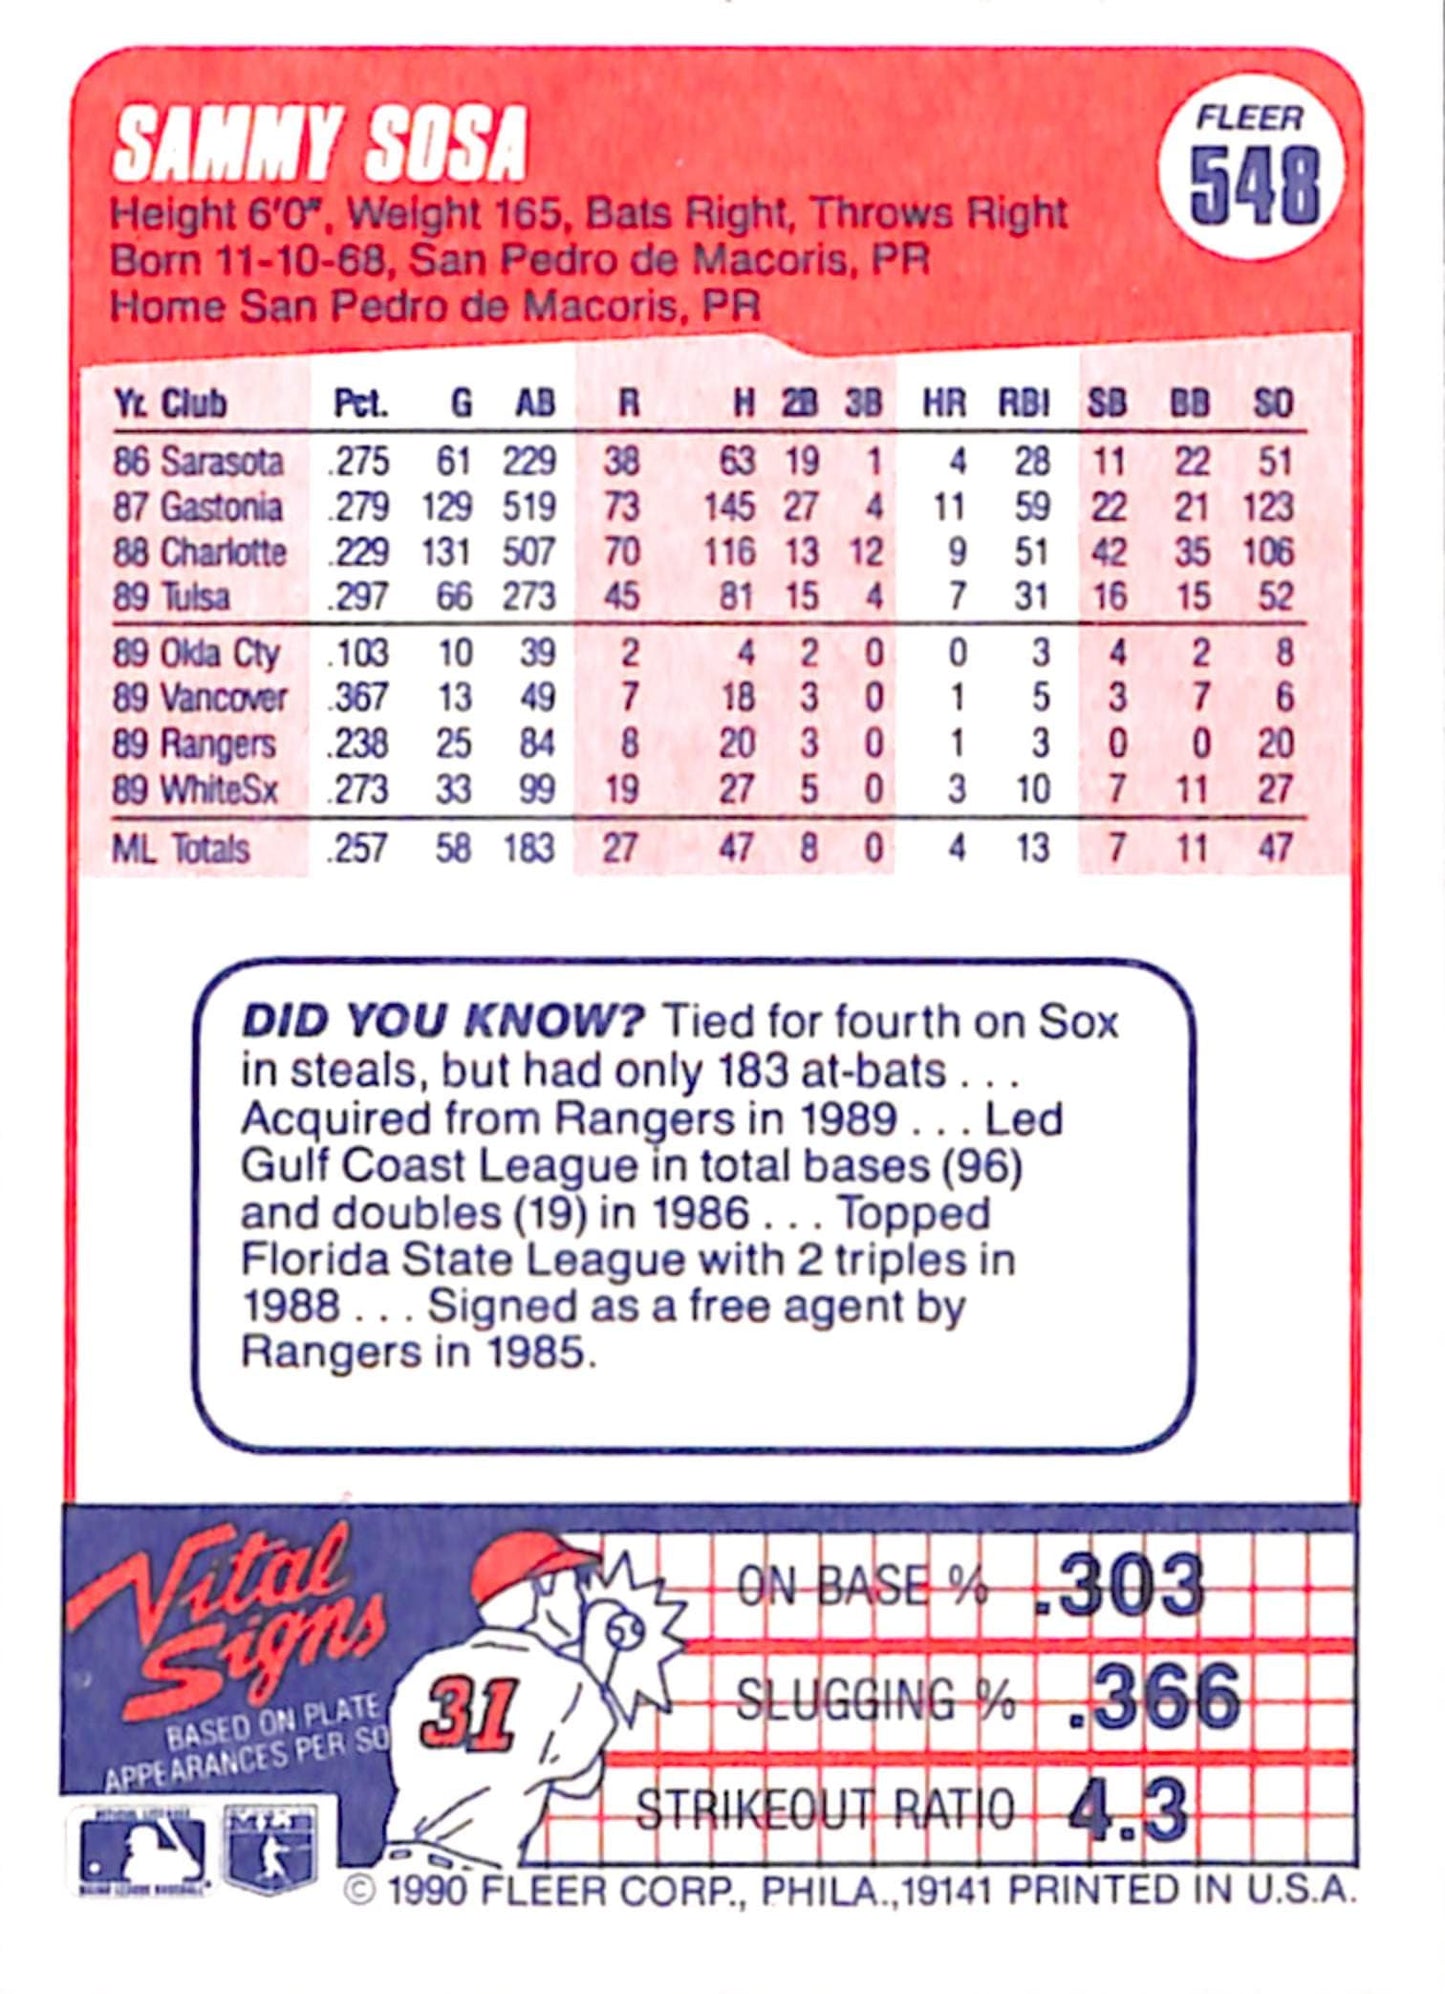 FIINR Baseball Card 1990 Fleer Sammy Sosa MLB Baseball Error Card #584 - Mint Condition - Error Card